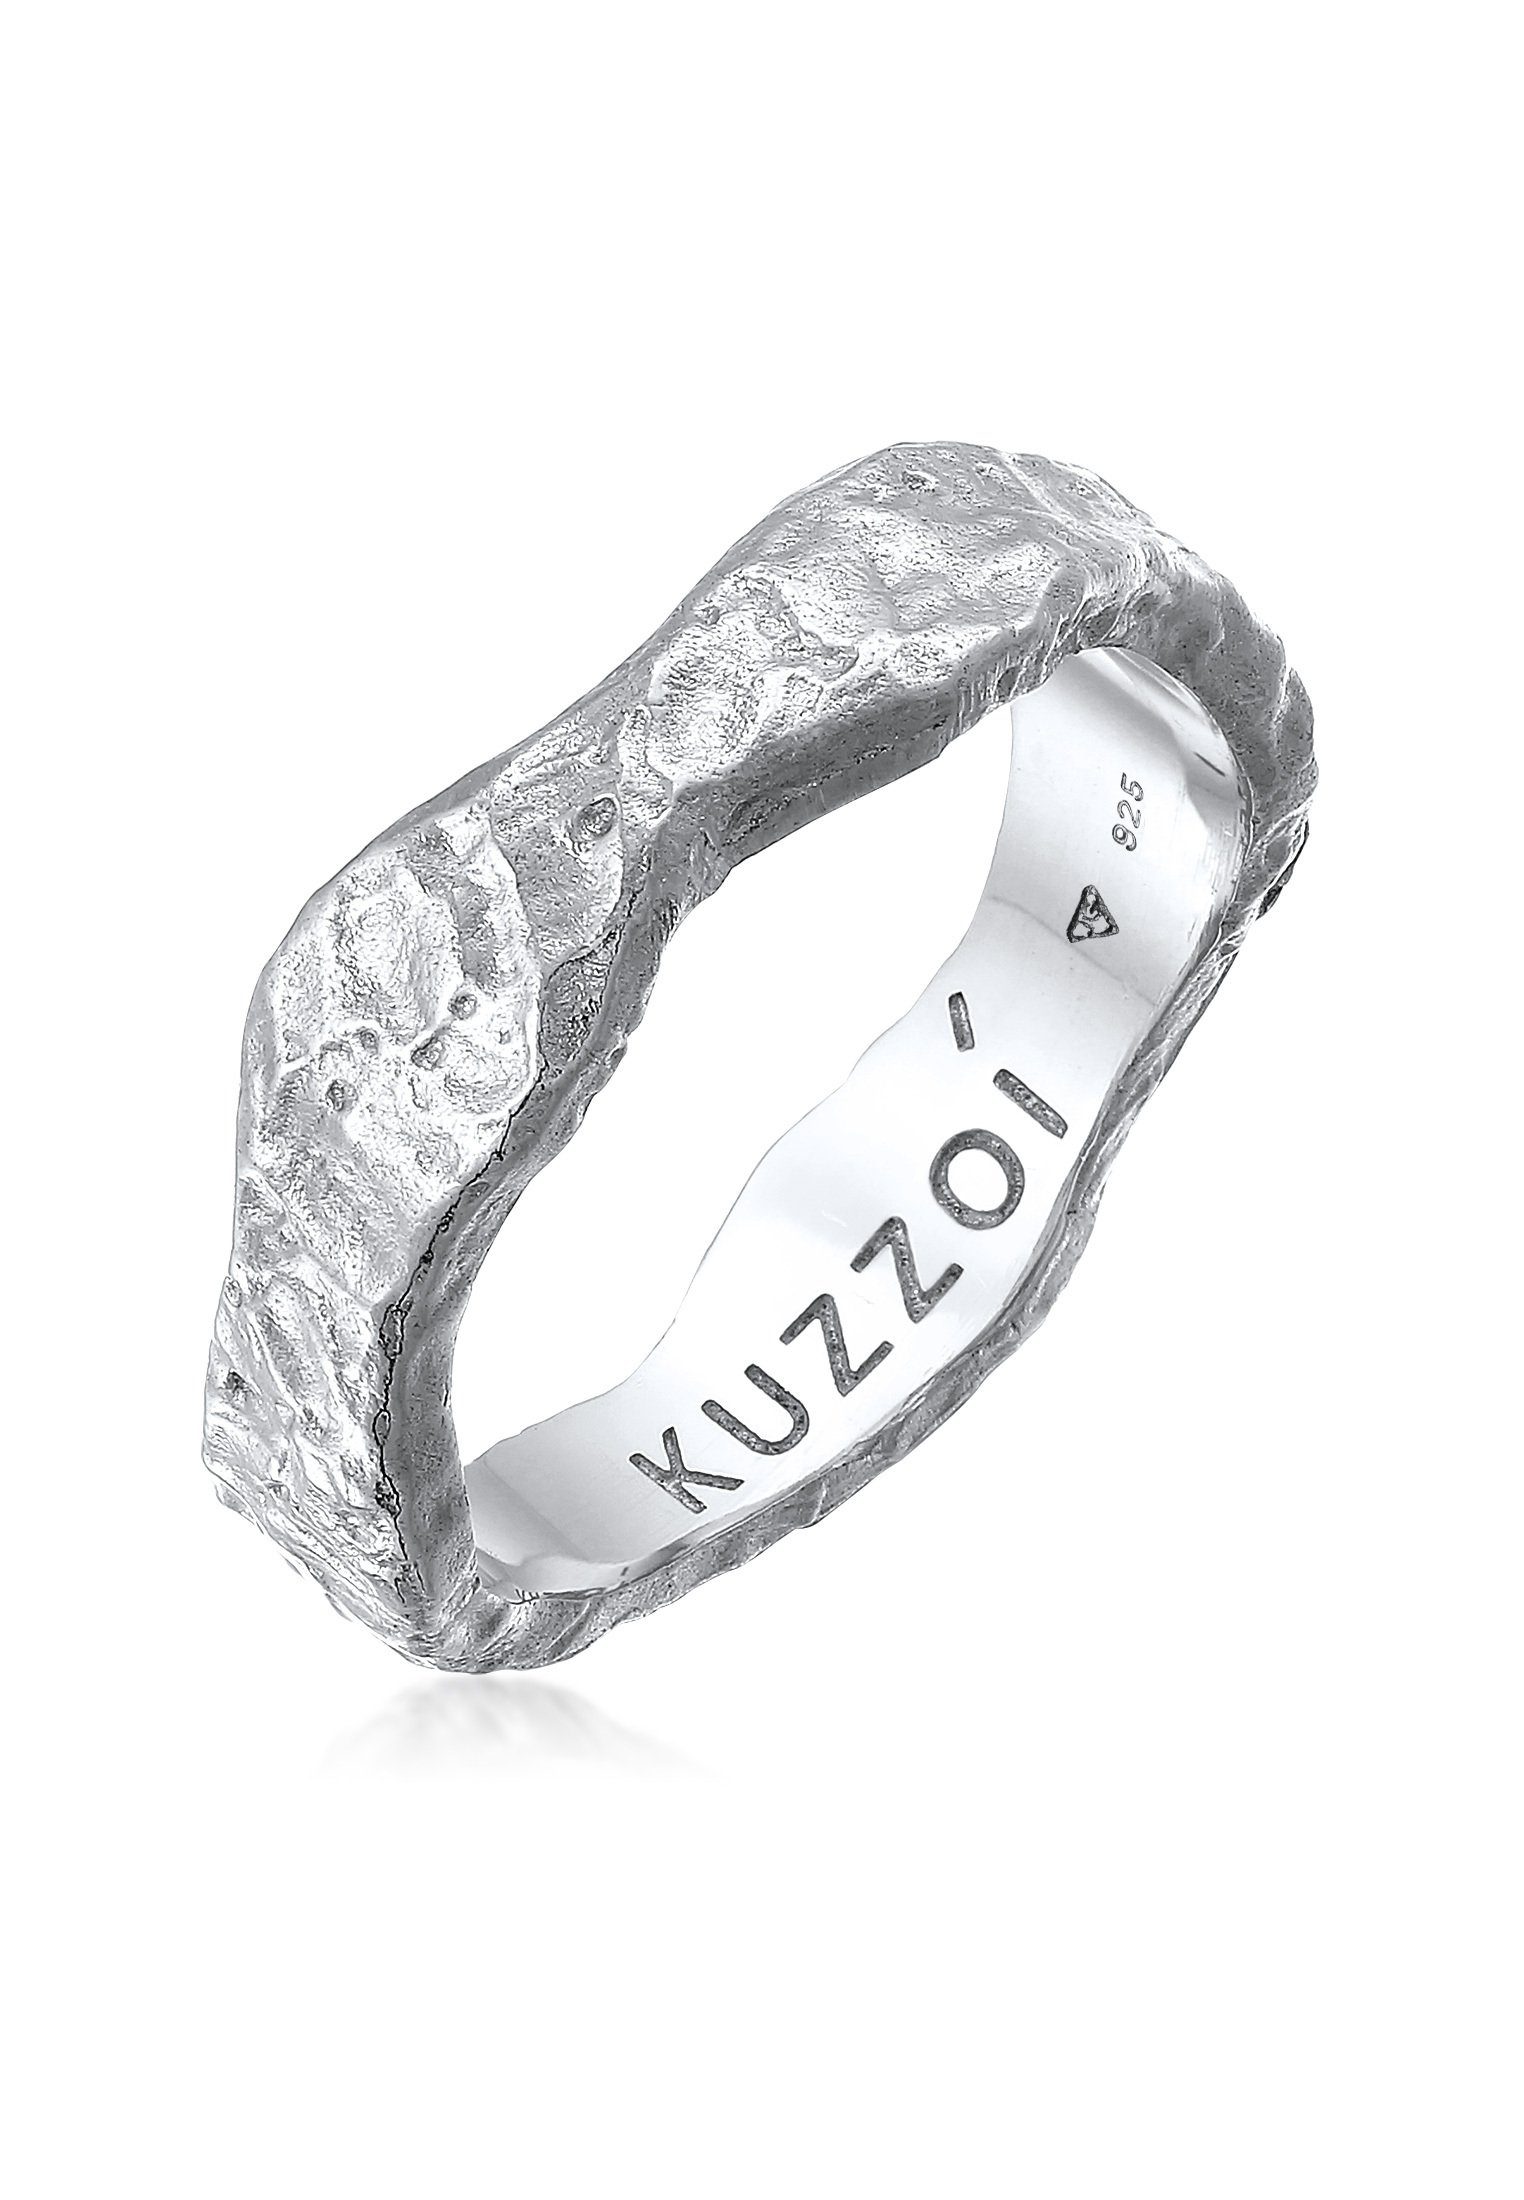 Kuzzoi Silberring Silber, Herren organic Accessoire Oberfläche Gehämmertes 925 Organic Struktur Bandring mit